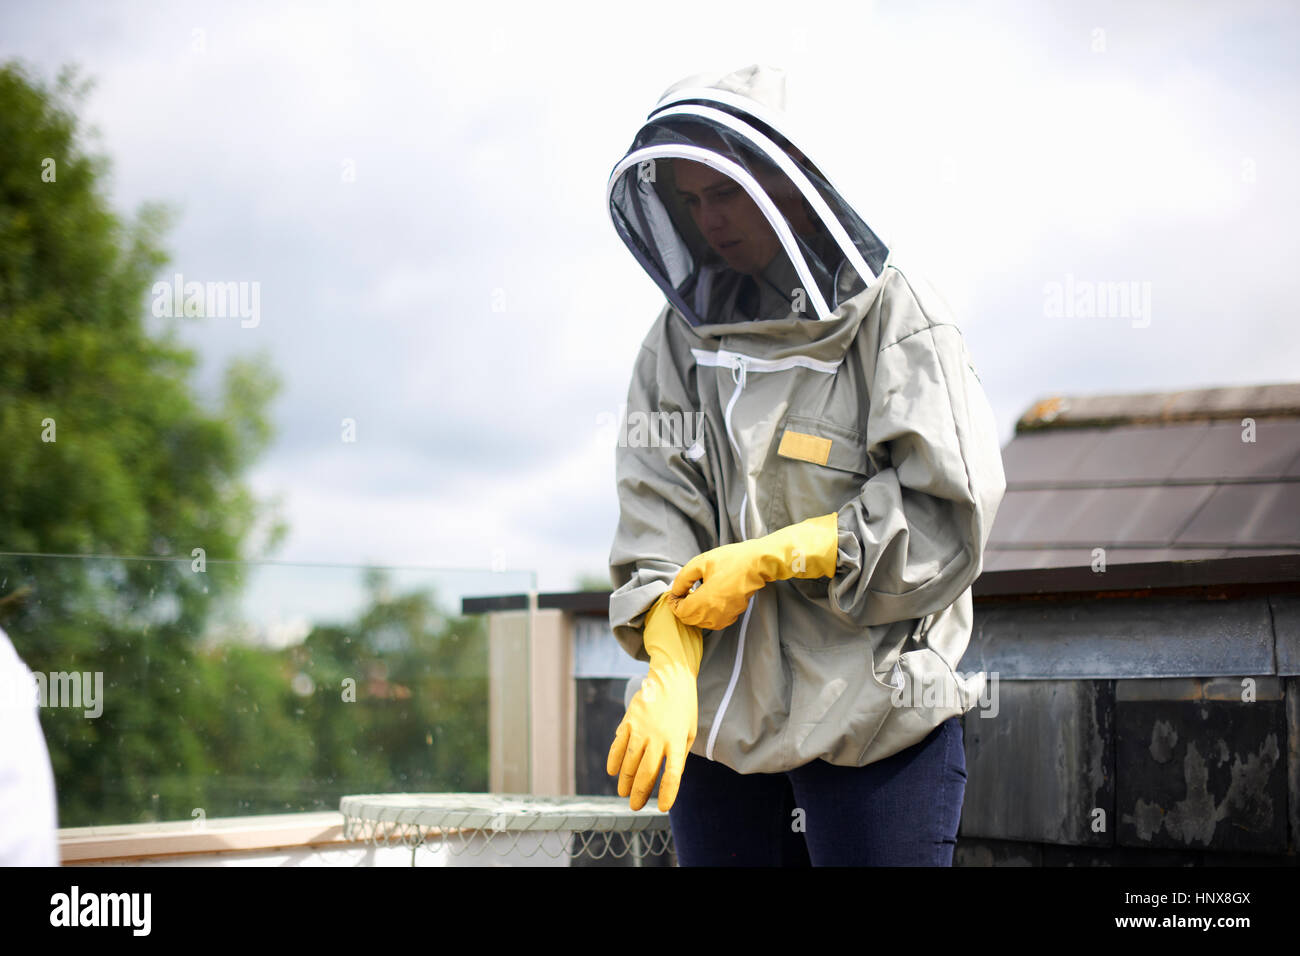 Beekeeper wearing beesuit, preparing to inspect hive Stock Photo